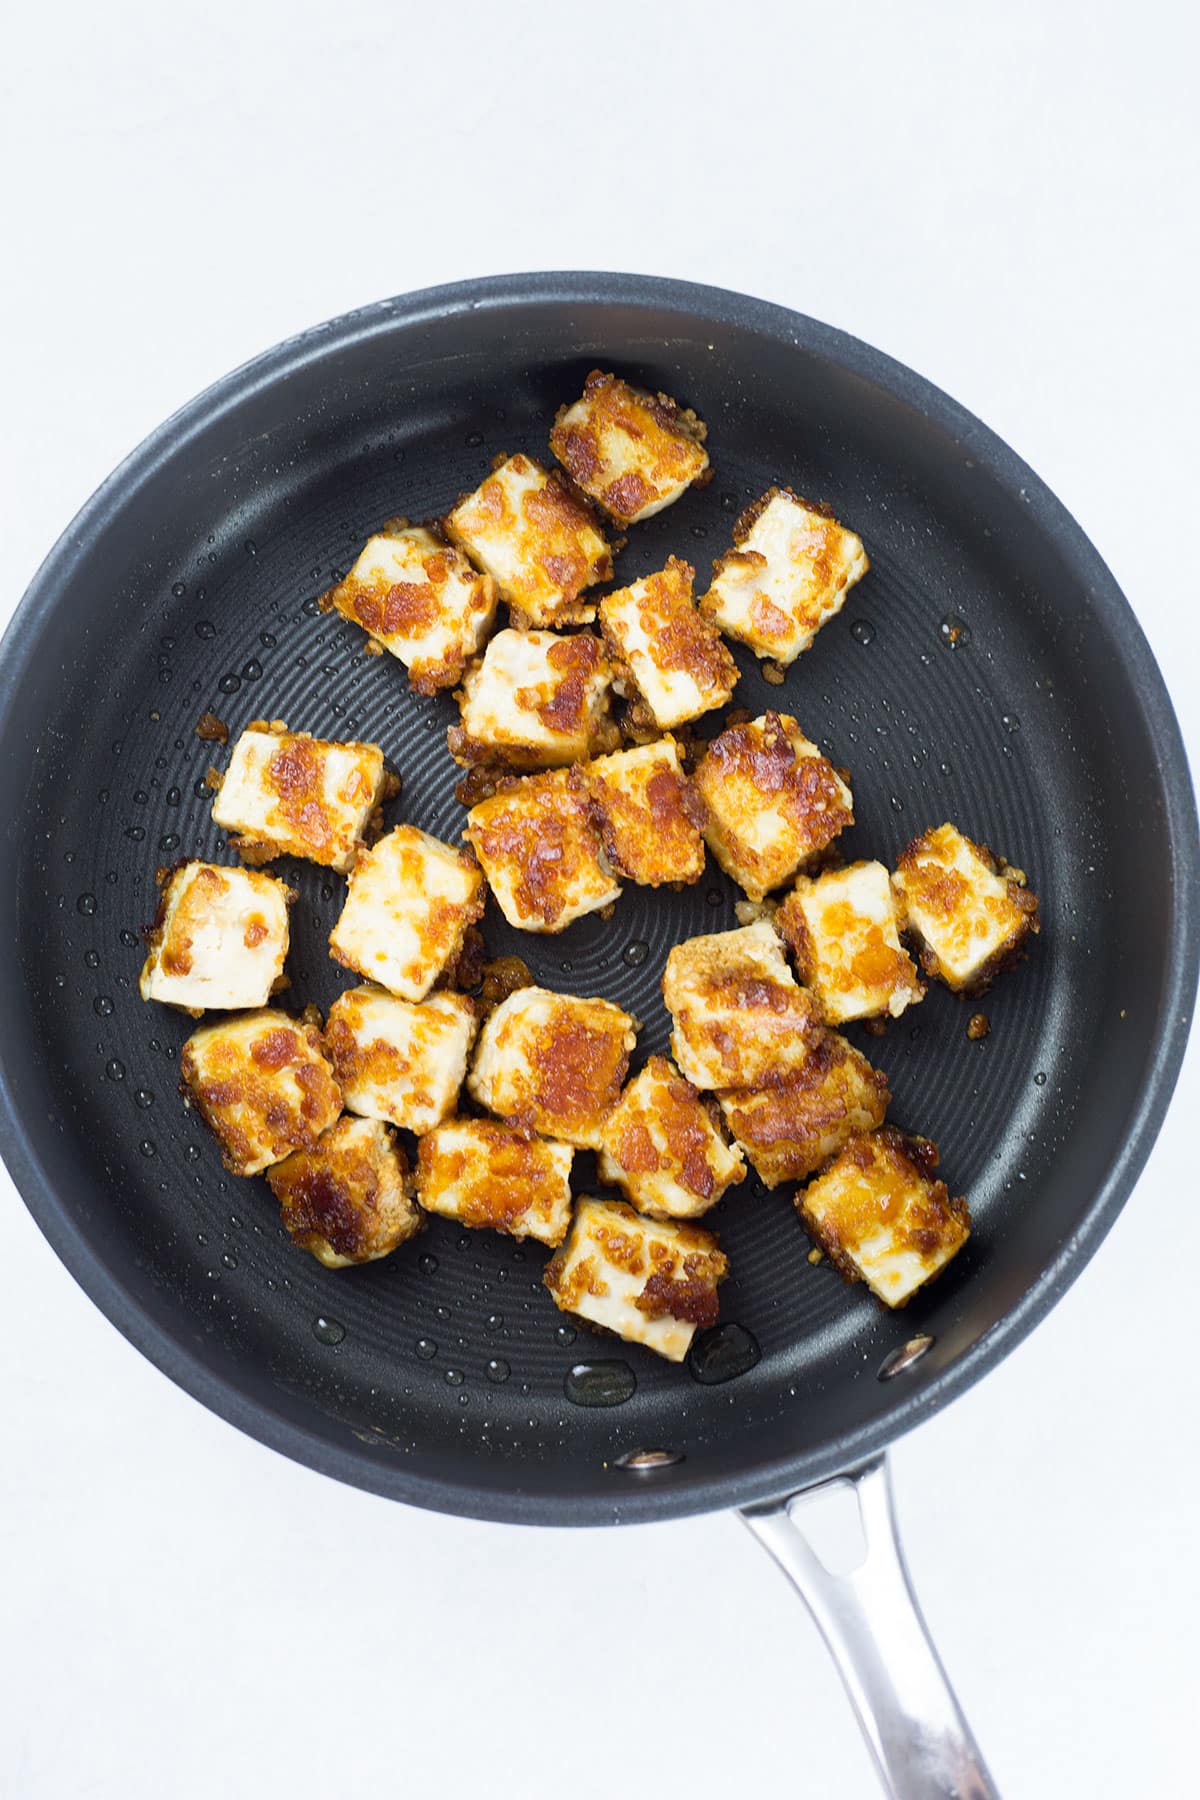 Tofu being cooked in black pan.